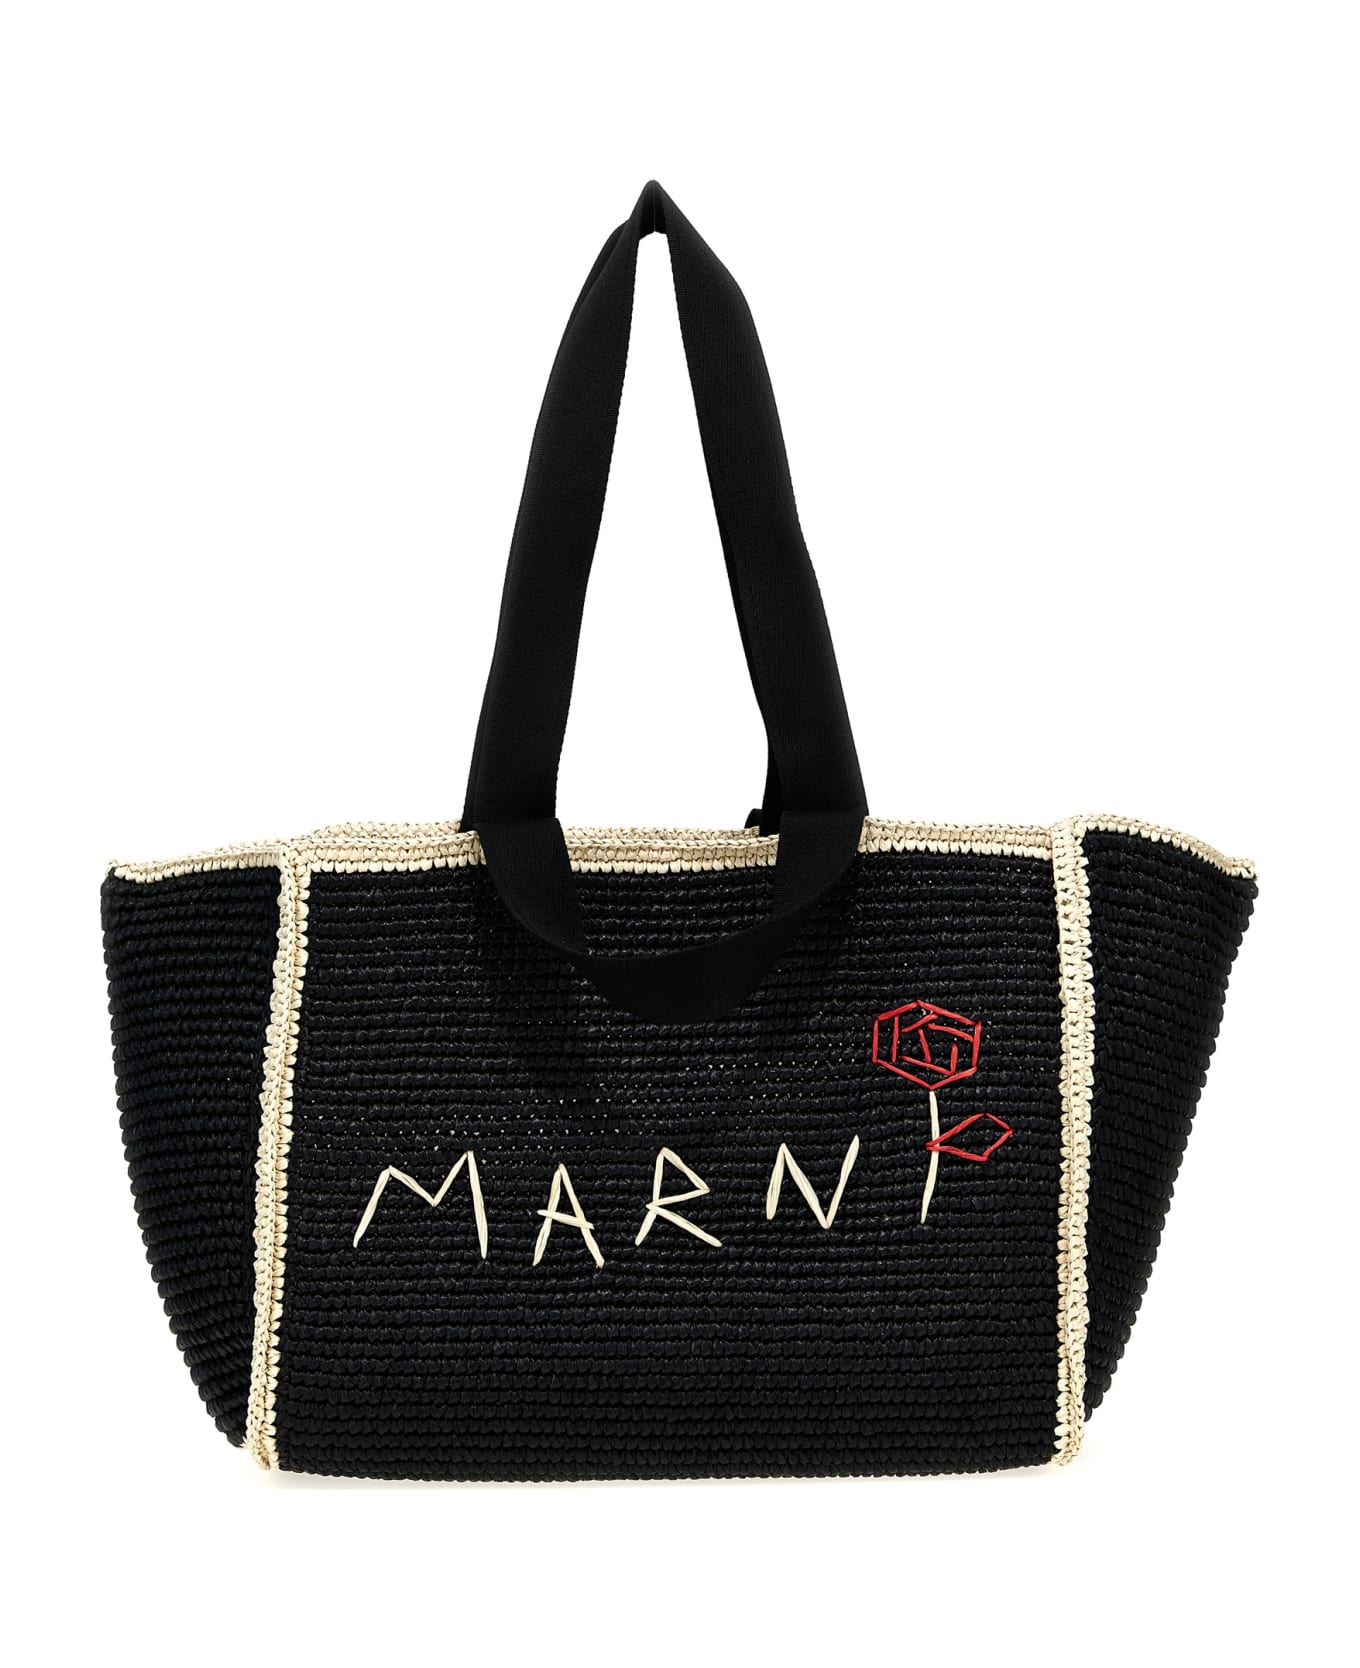 Marni Macramé Shopping Bag - Black/ivory/black トートバッグ